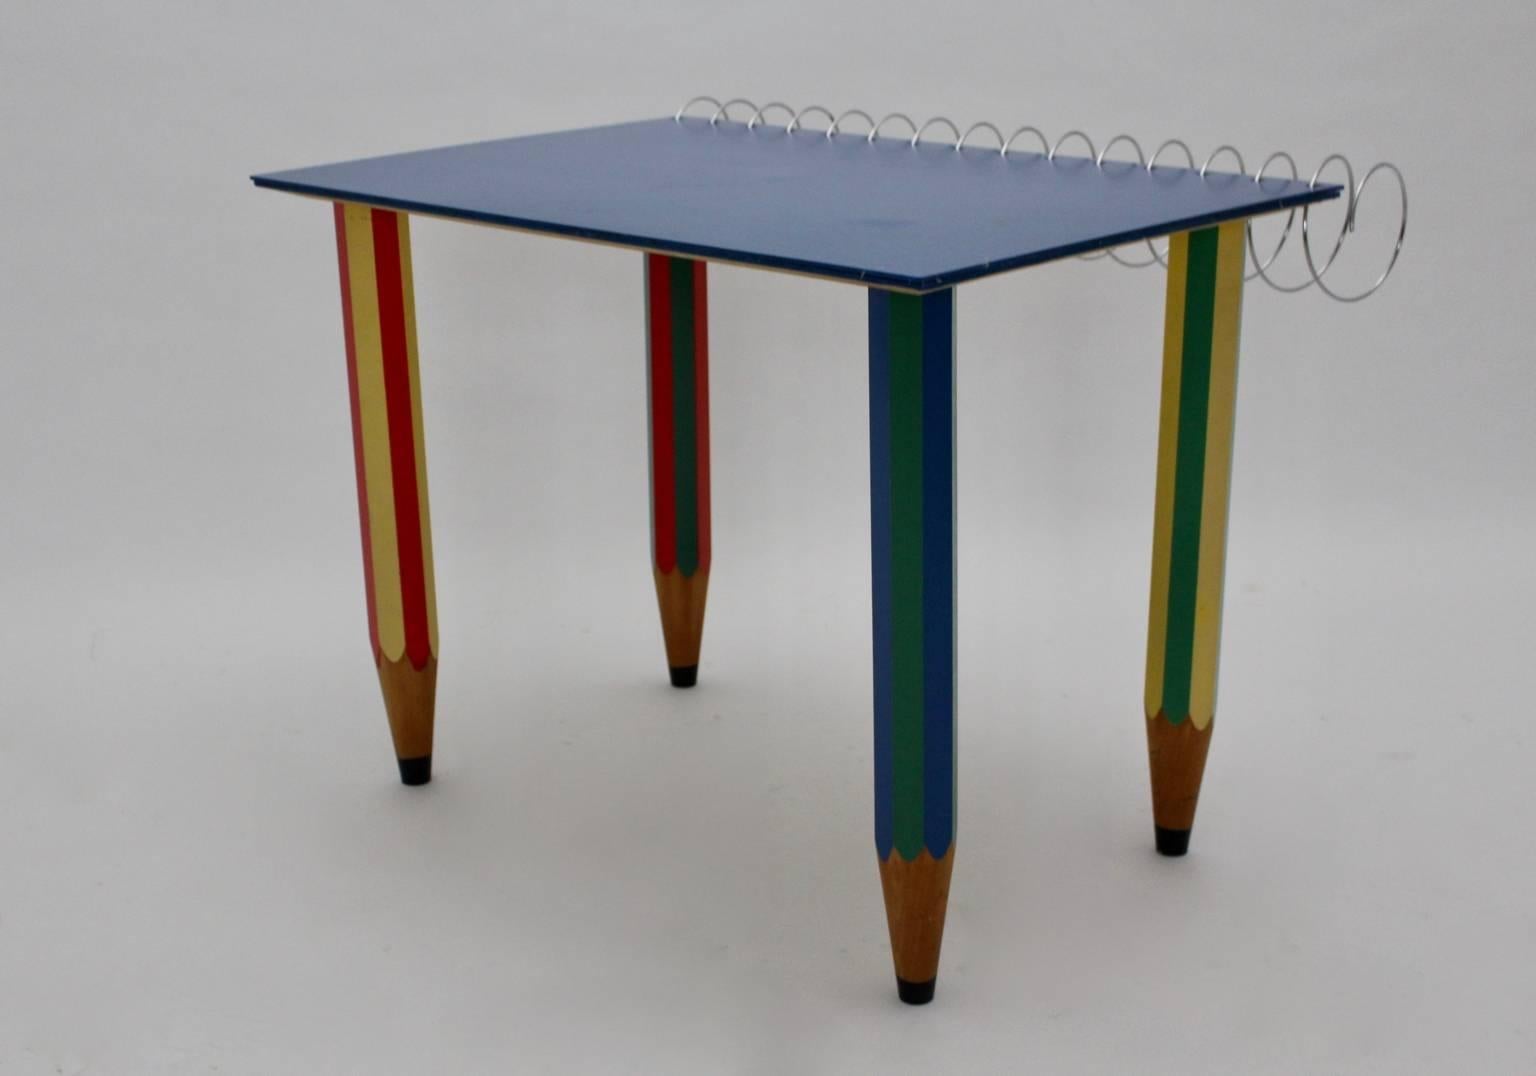 Post-Modern Multicolored Pop Art Vintage Desk or Writing Table by Pierre Sala 1983